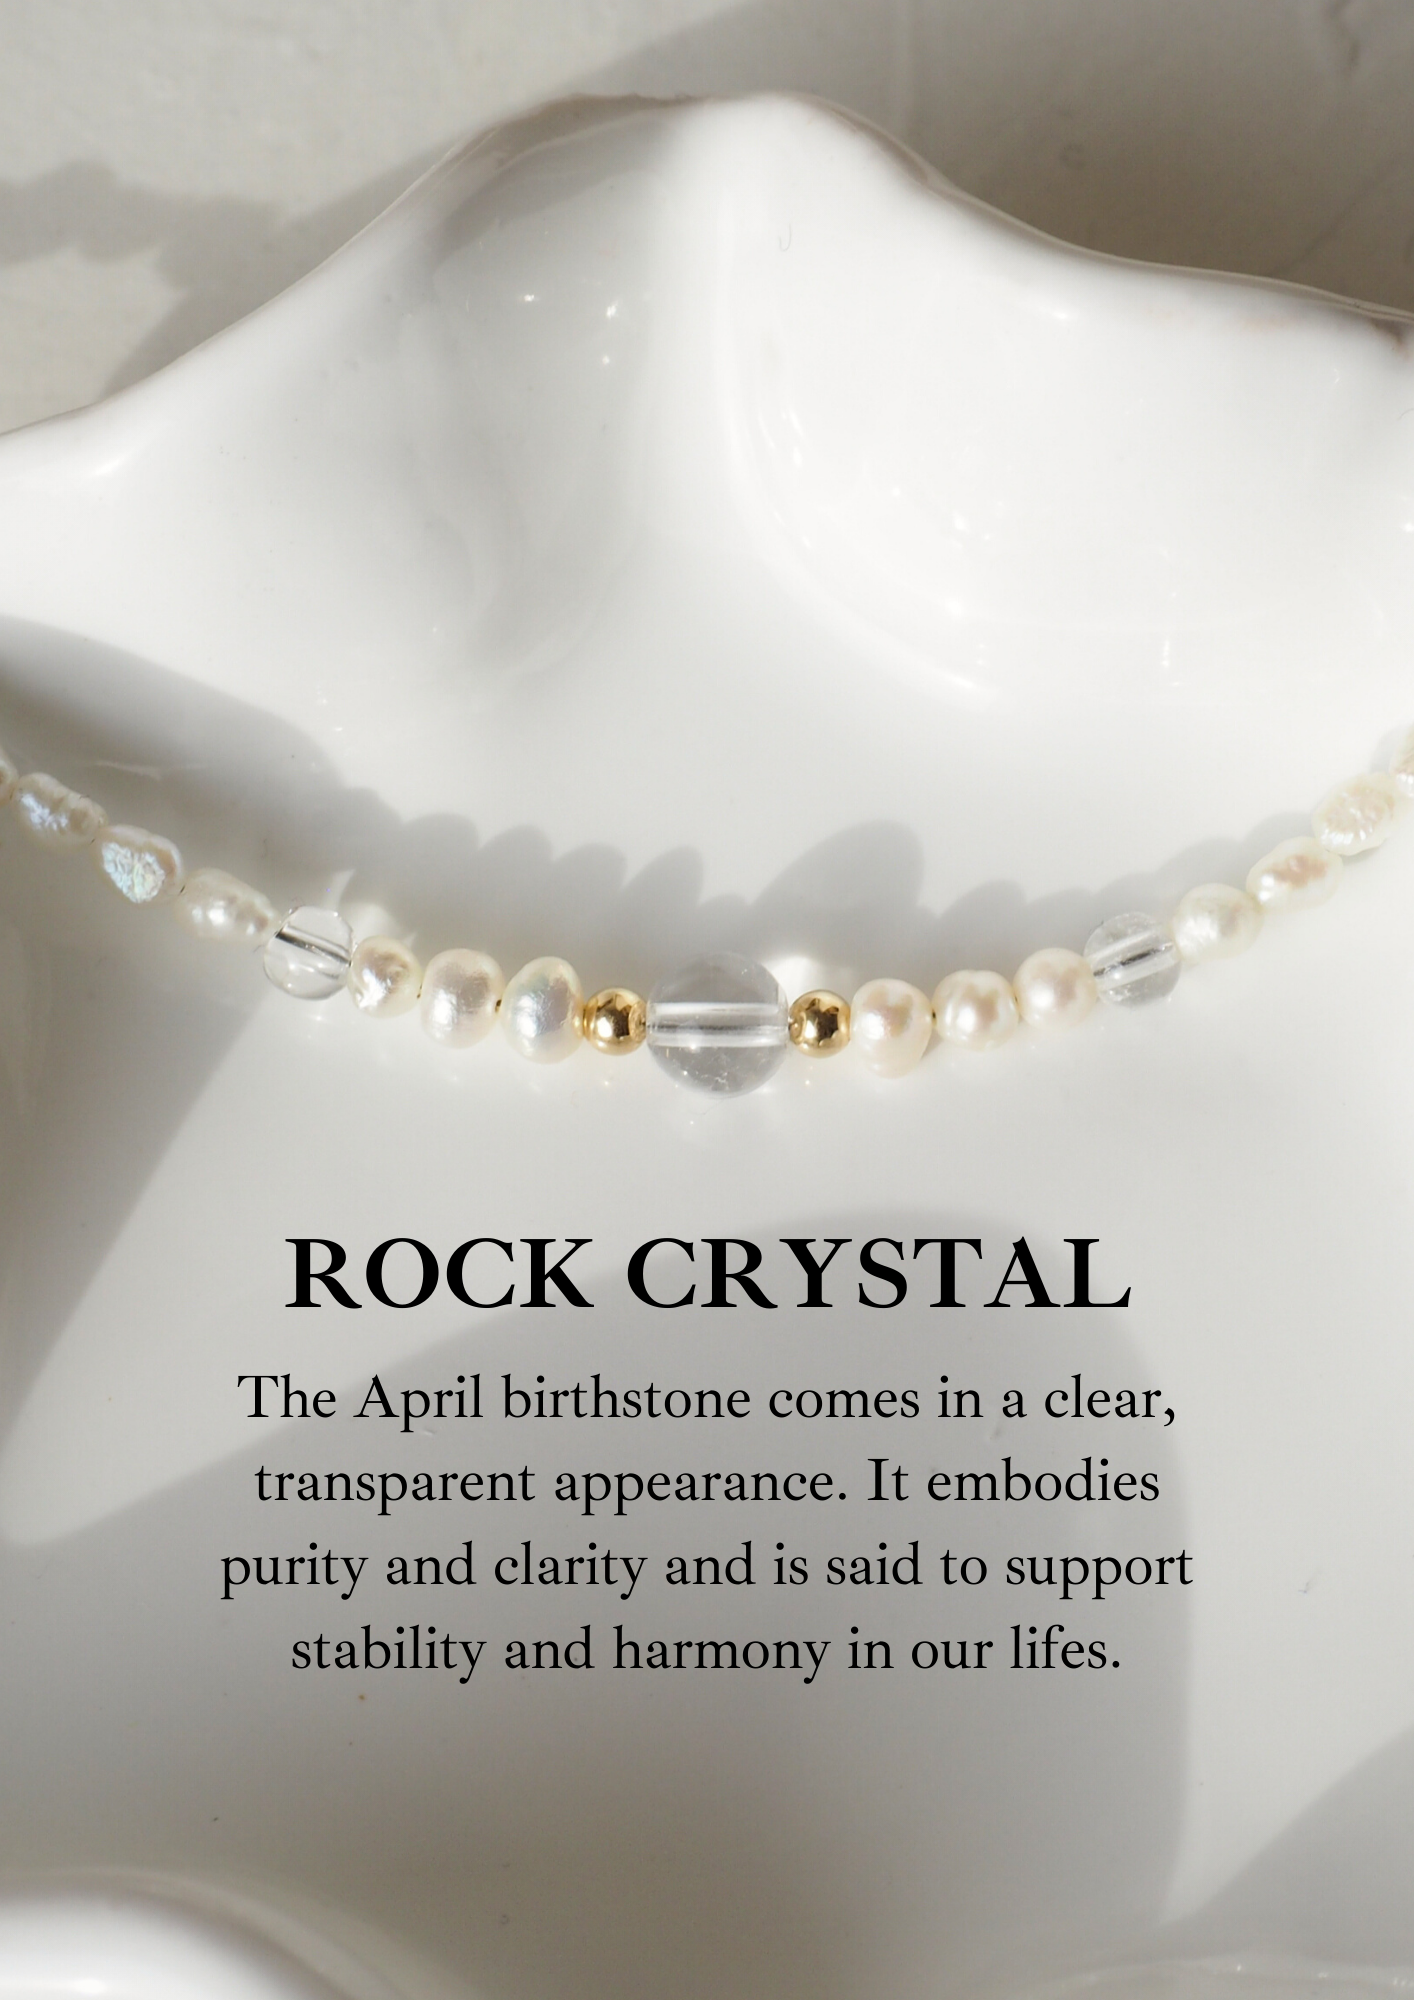 Natural Teal Blue Diamond Bracelet Solid 14K White Gold , April Birthstone  | eBay